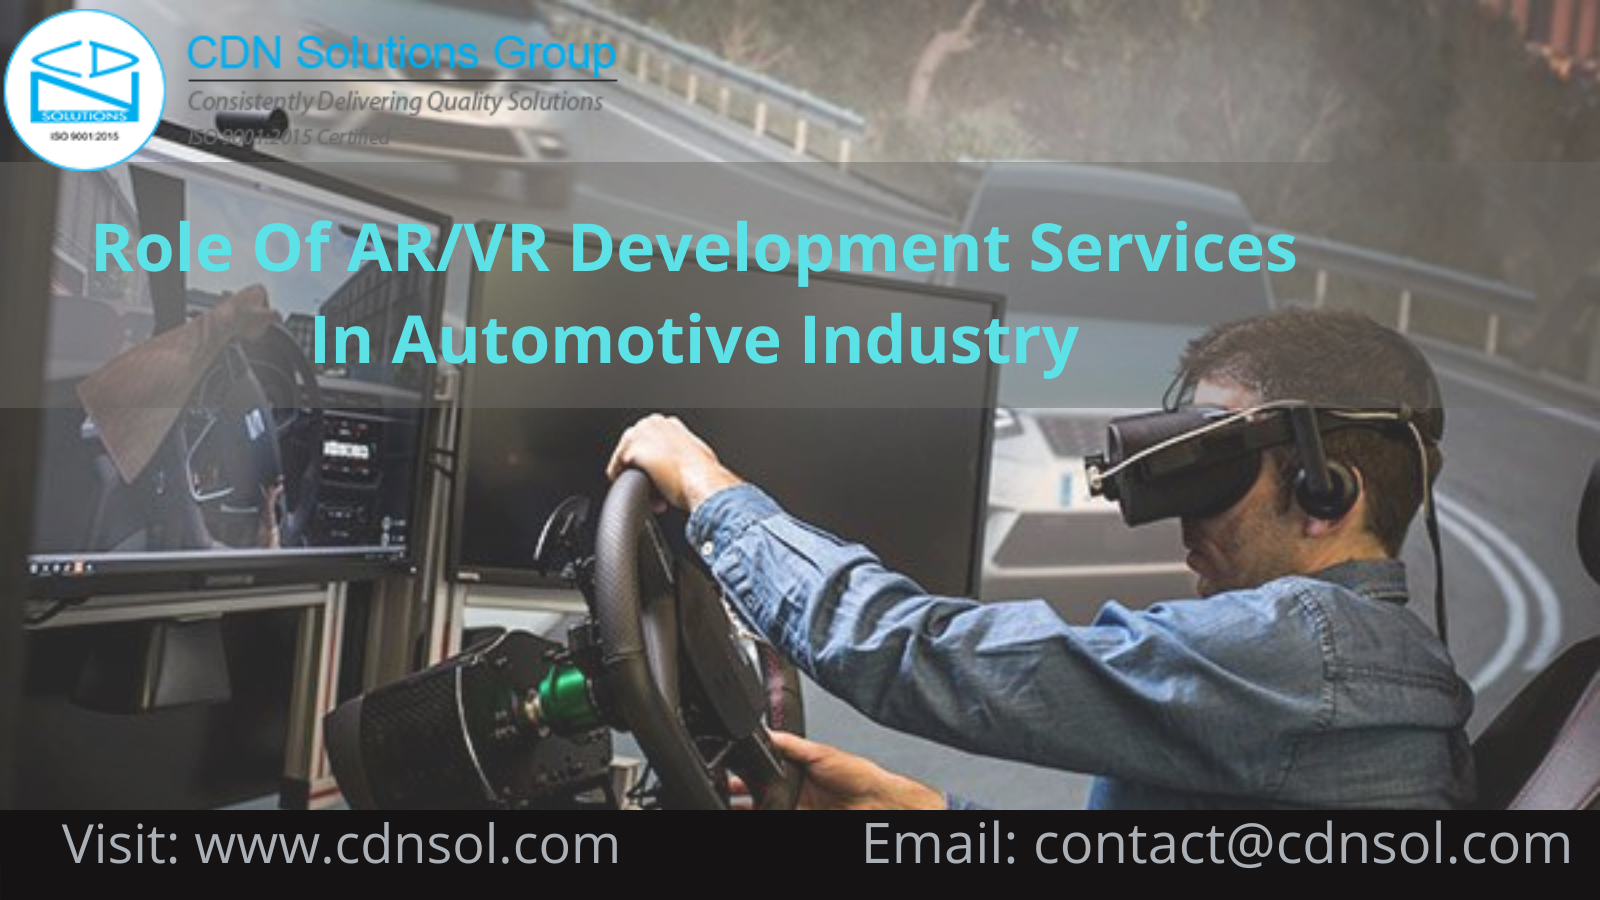 How AR/VR Development Services Revolutionize Marketing Strategies In Automotive Industry